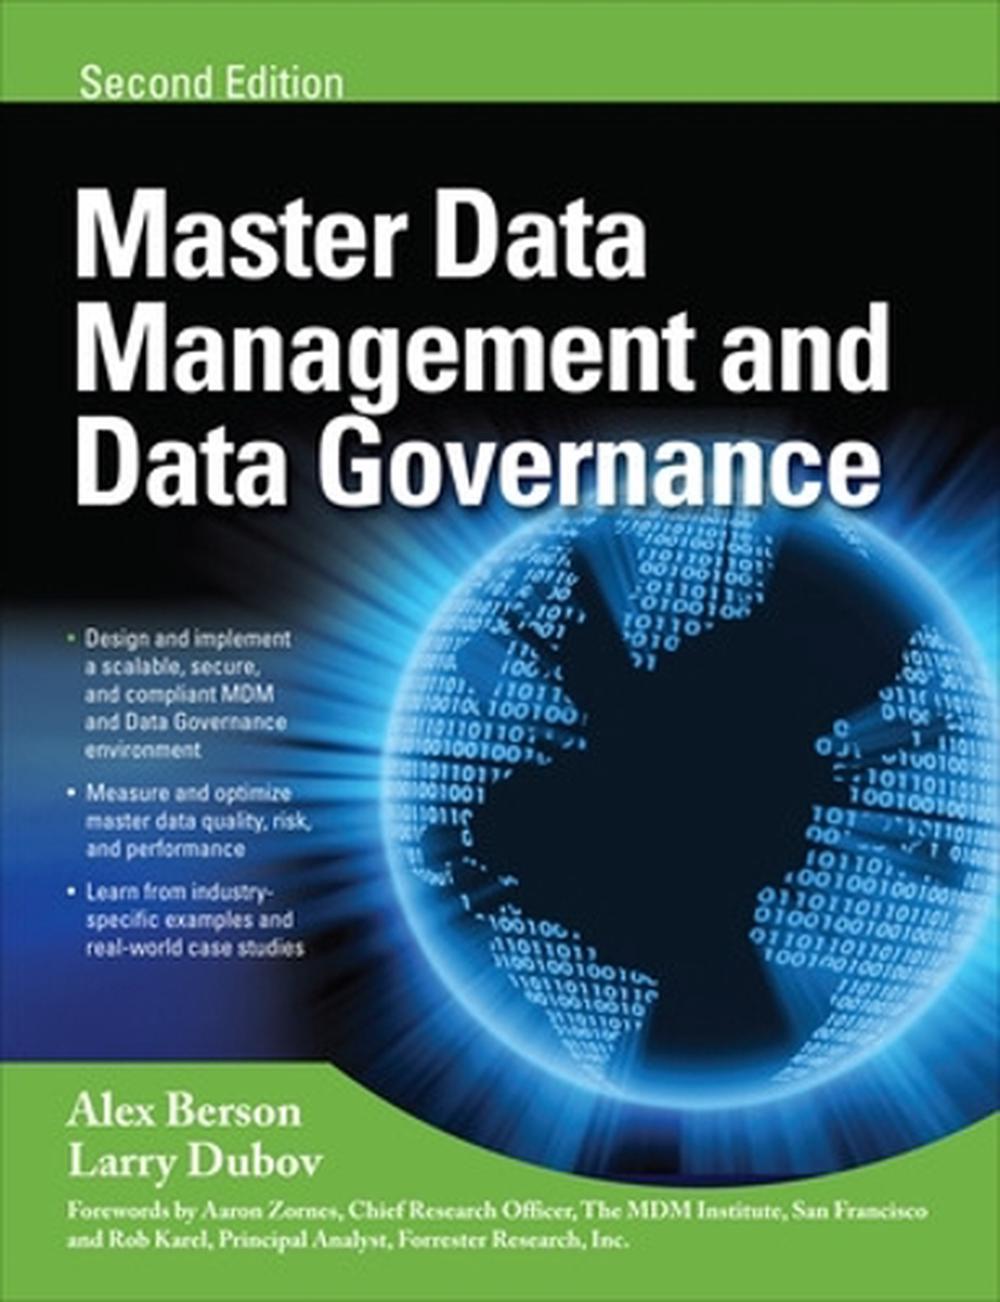 case study master data management